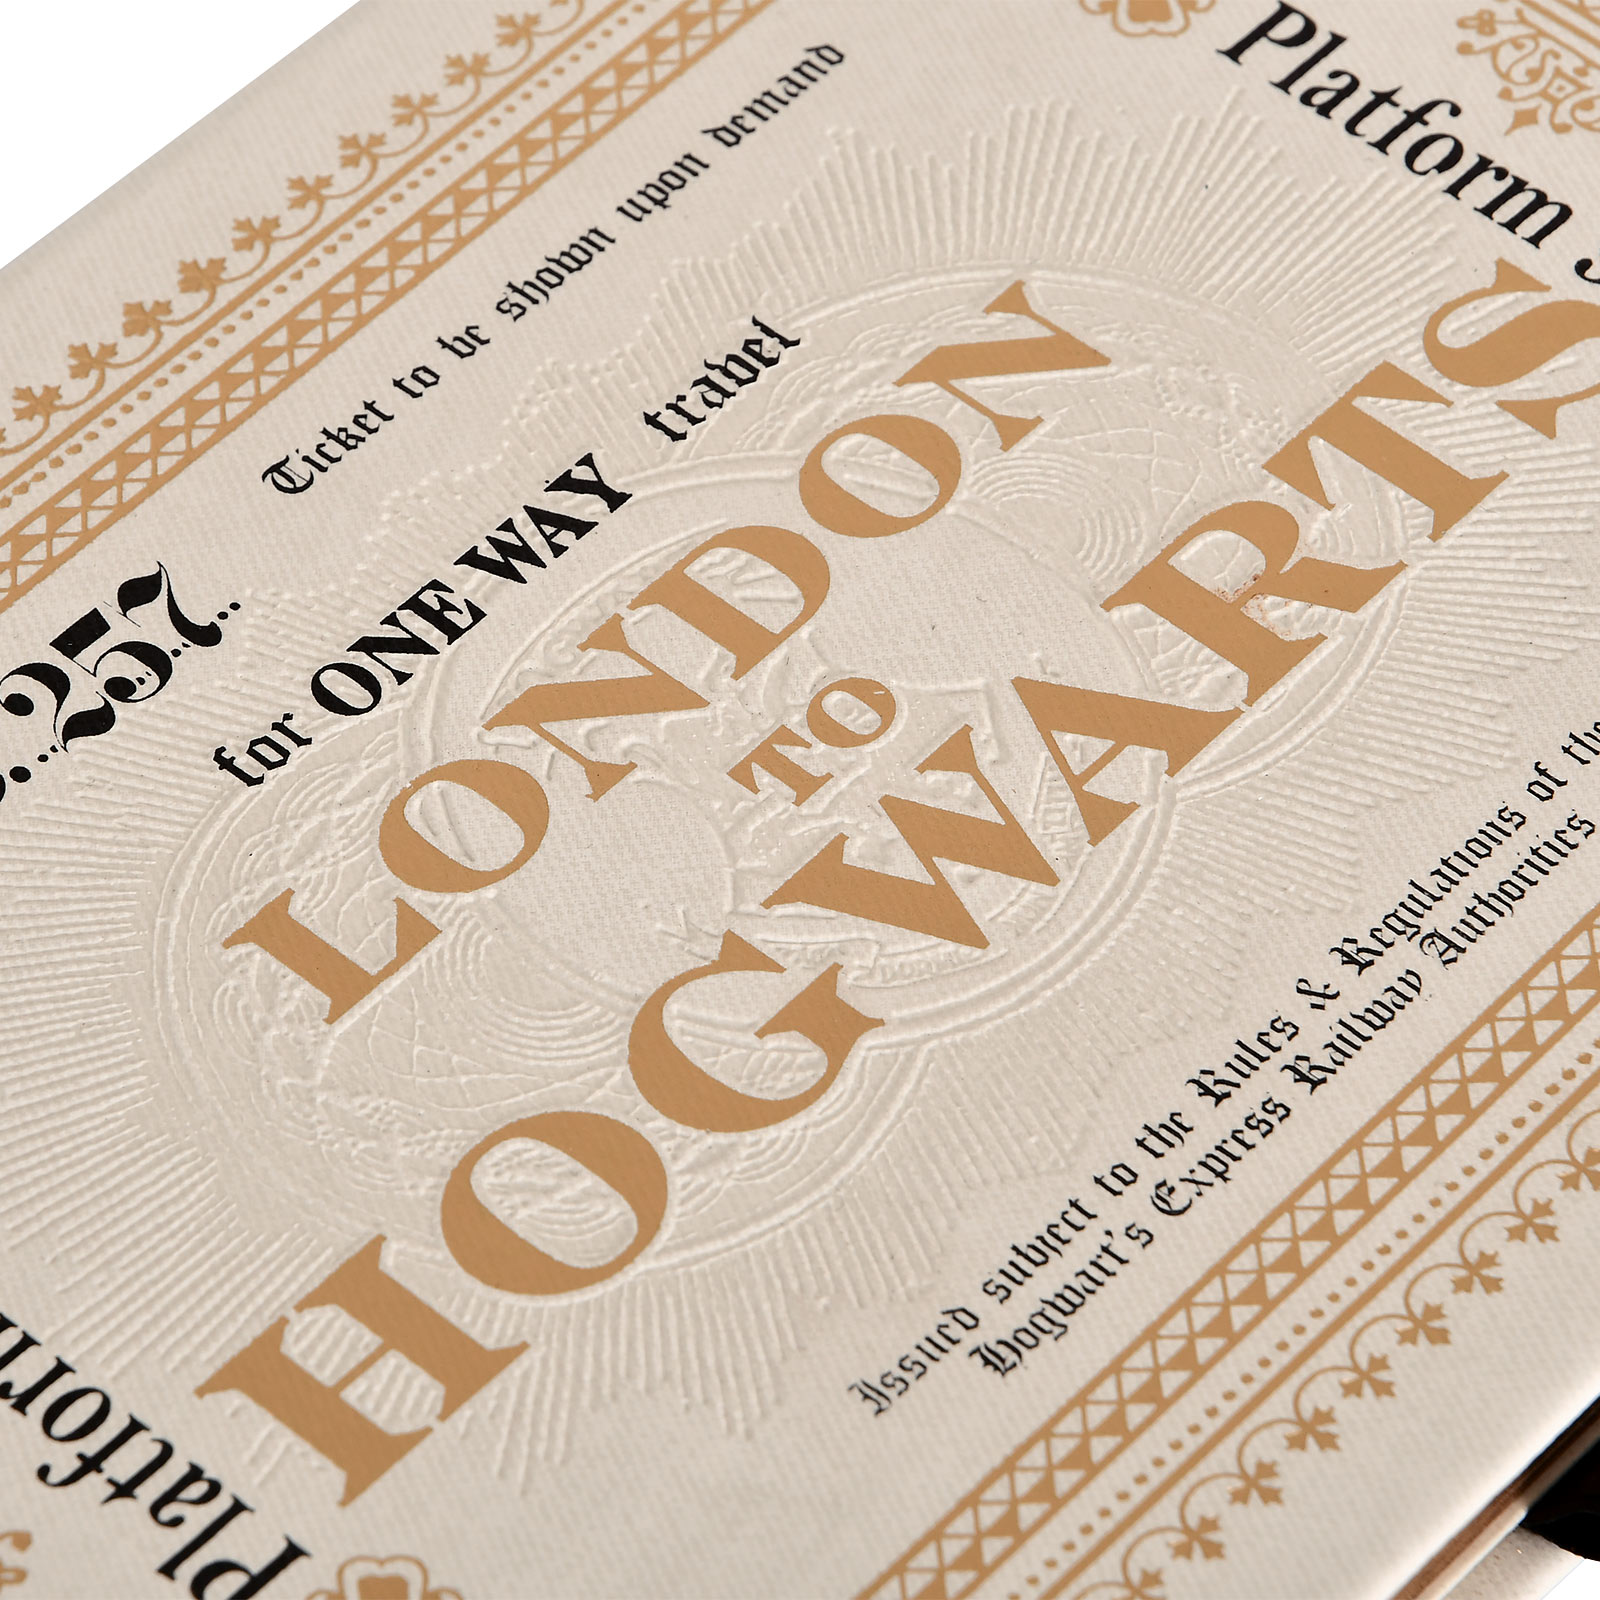 Harry Potter - Billet du Poudlard Express Carnet Premium A5